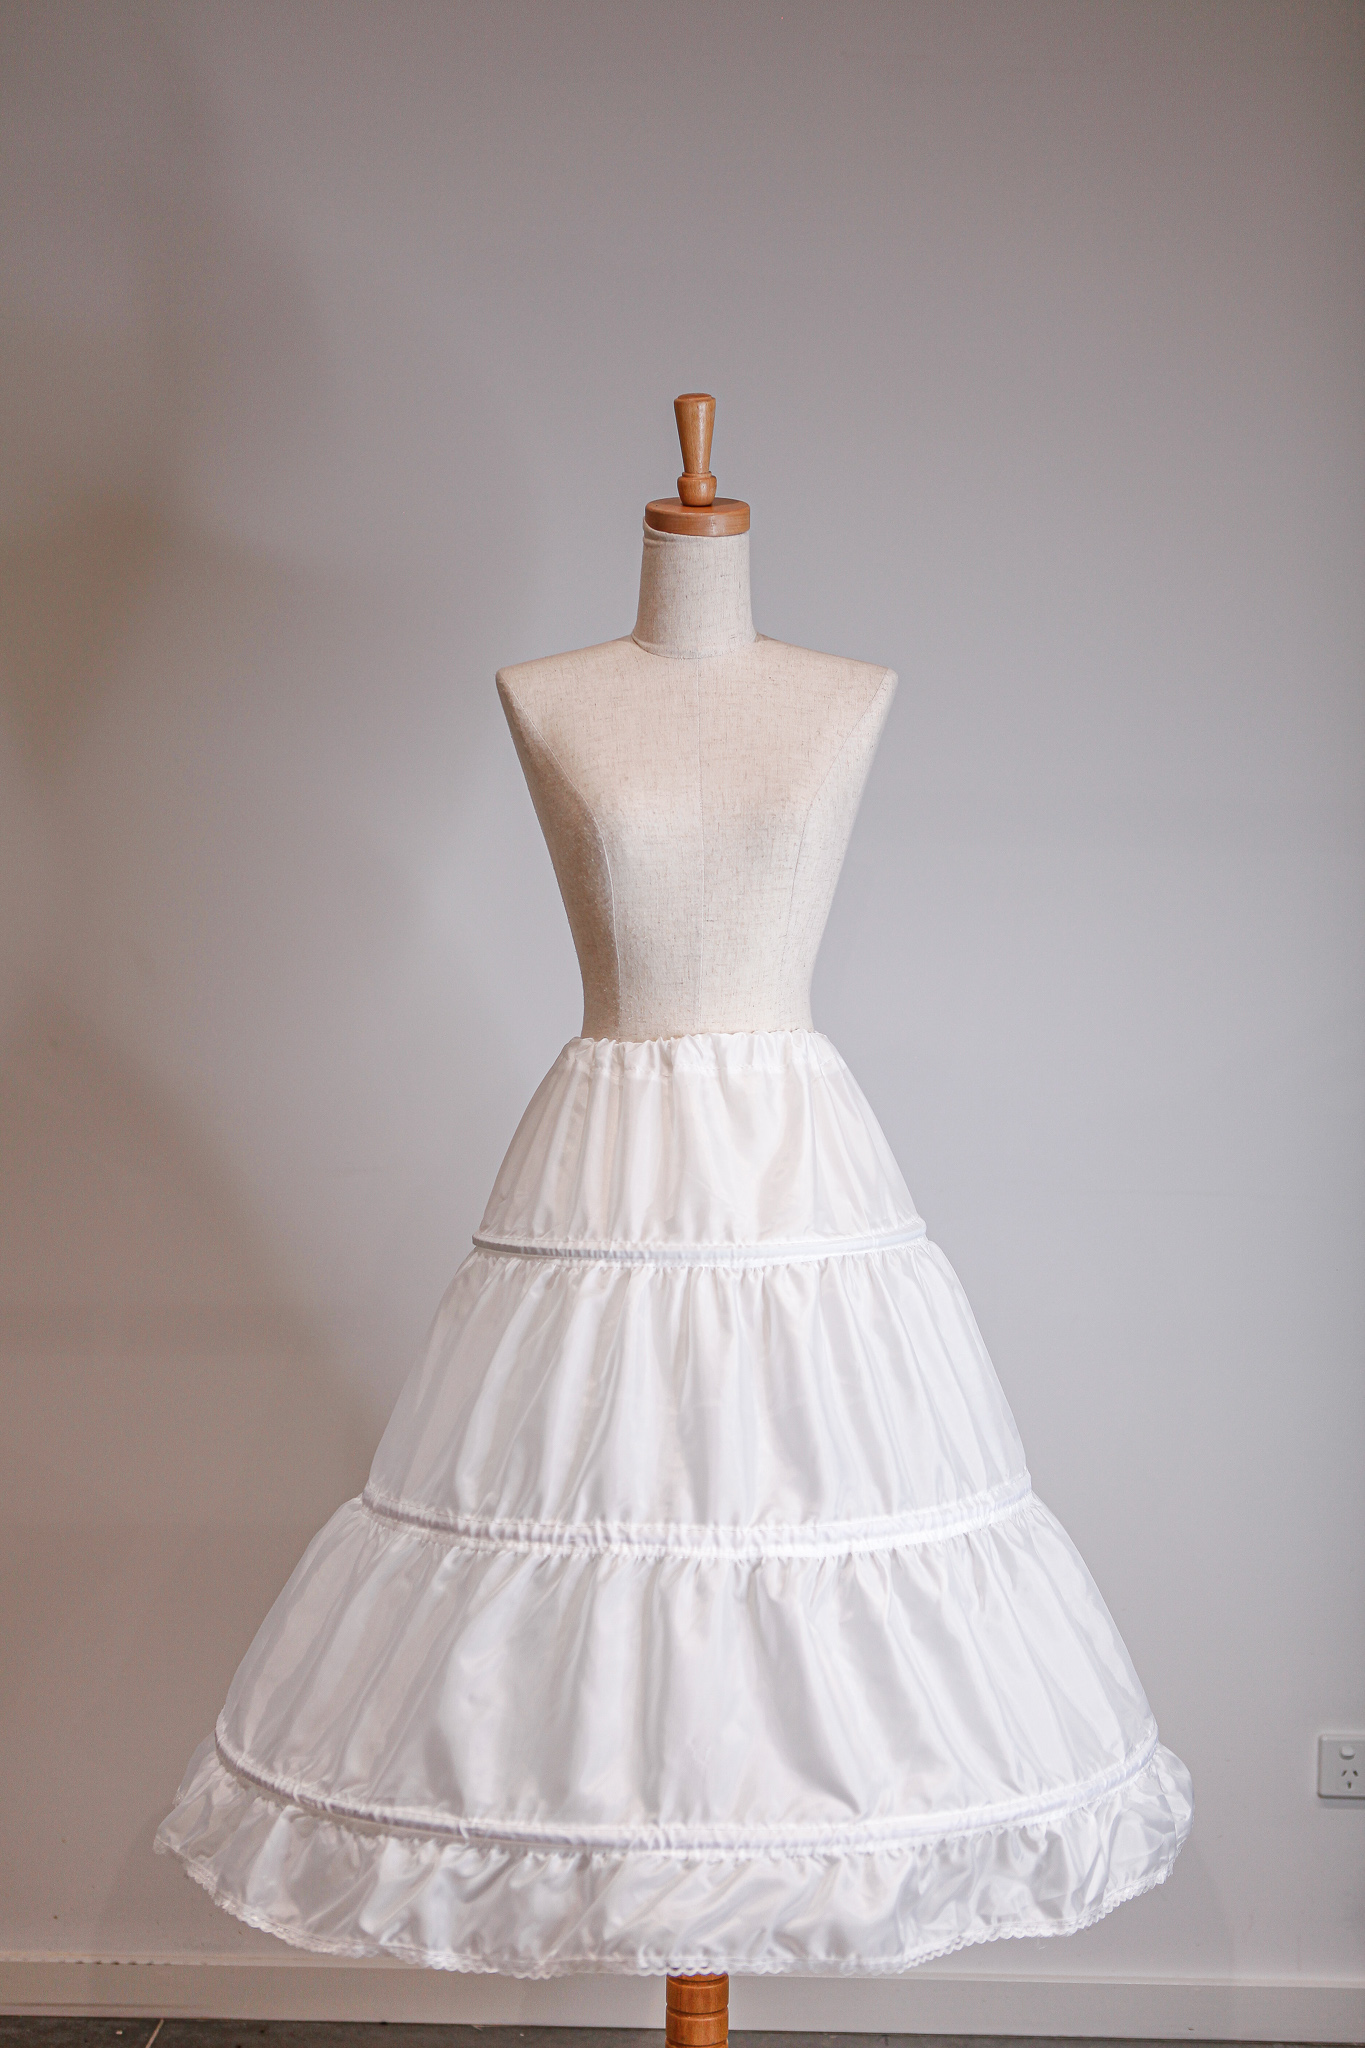 Buy Girl 3 Tiers Petticoat Online in Australia @ Jullia Bridal